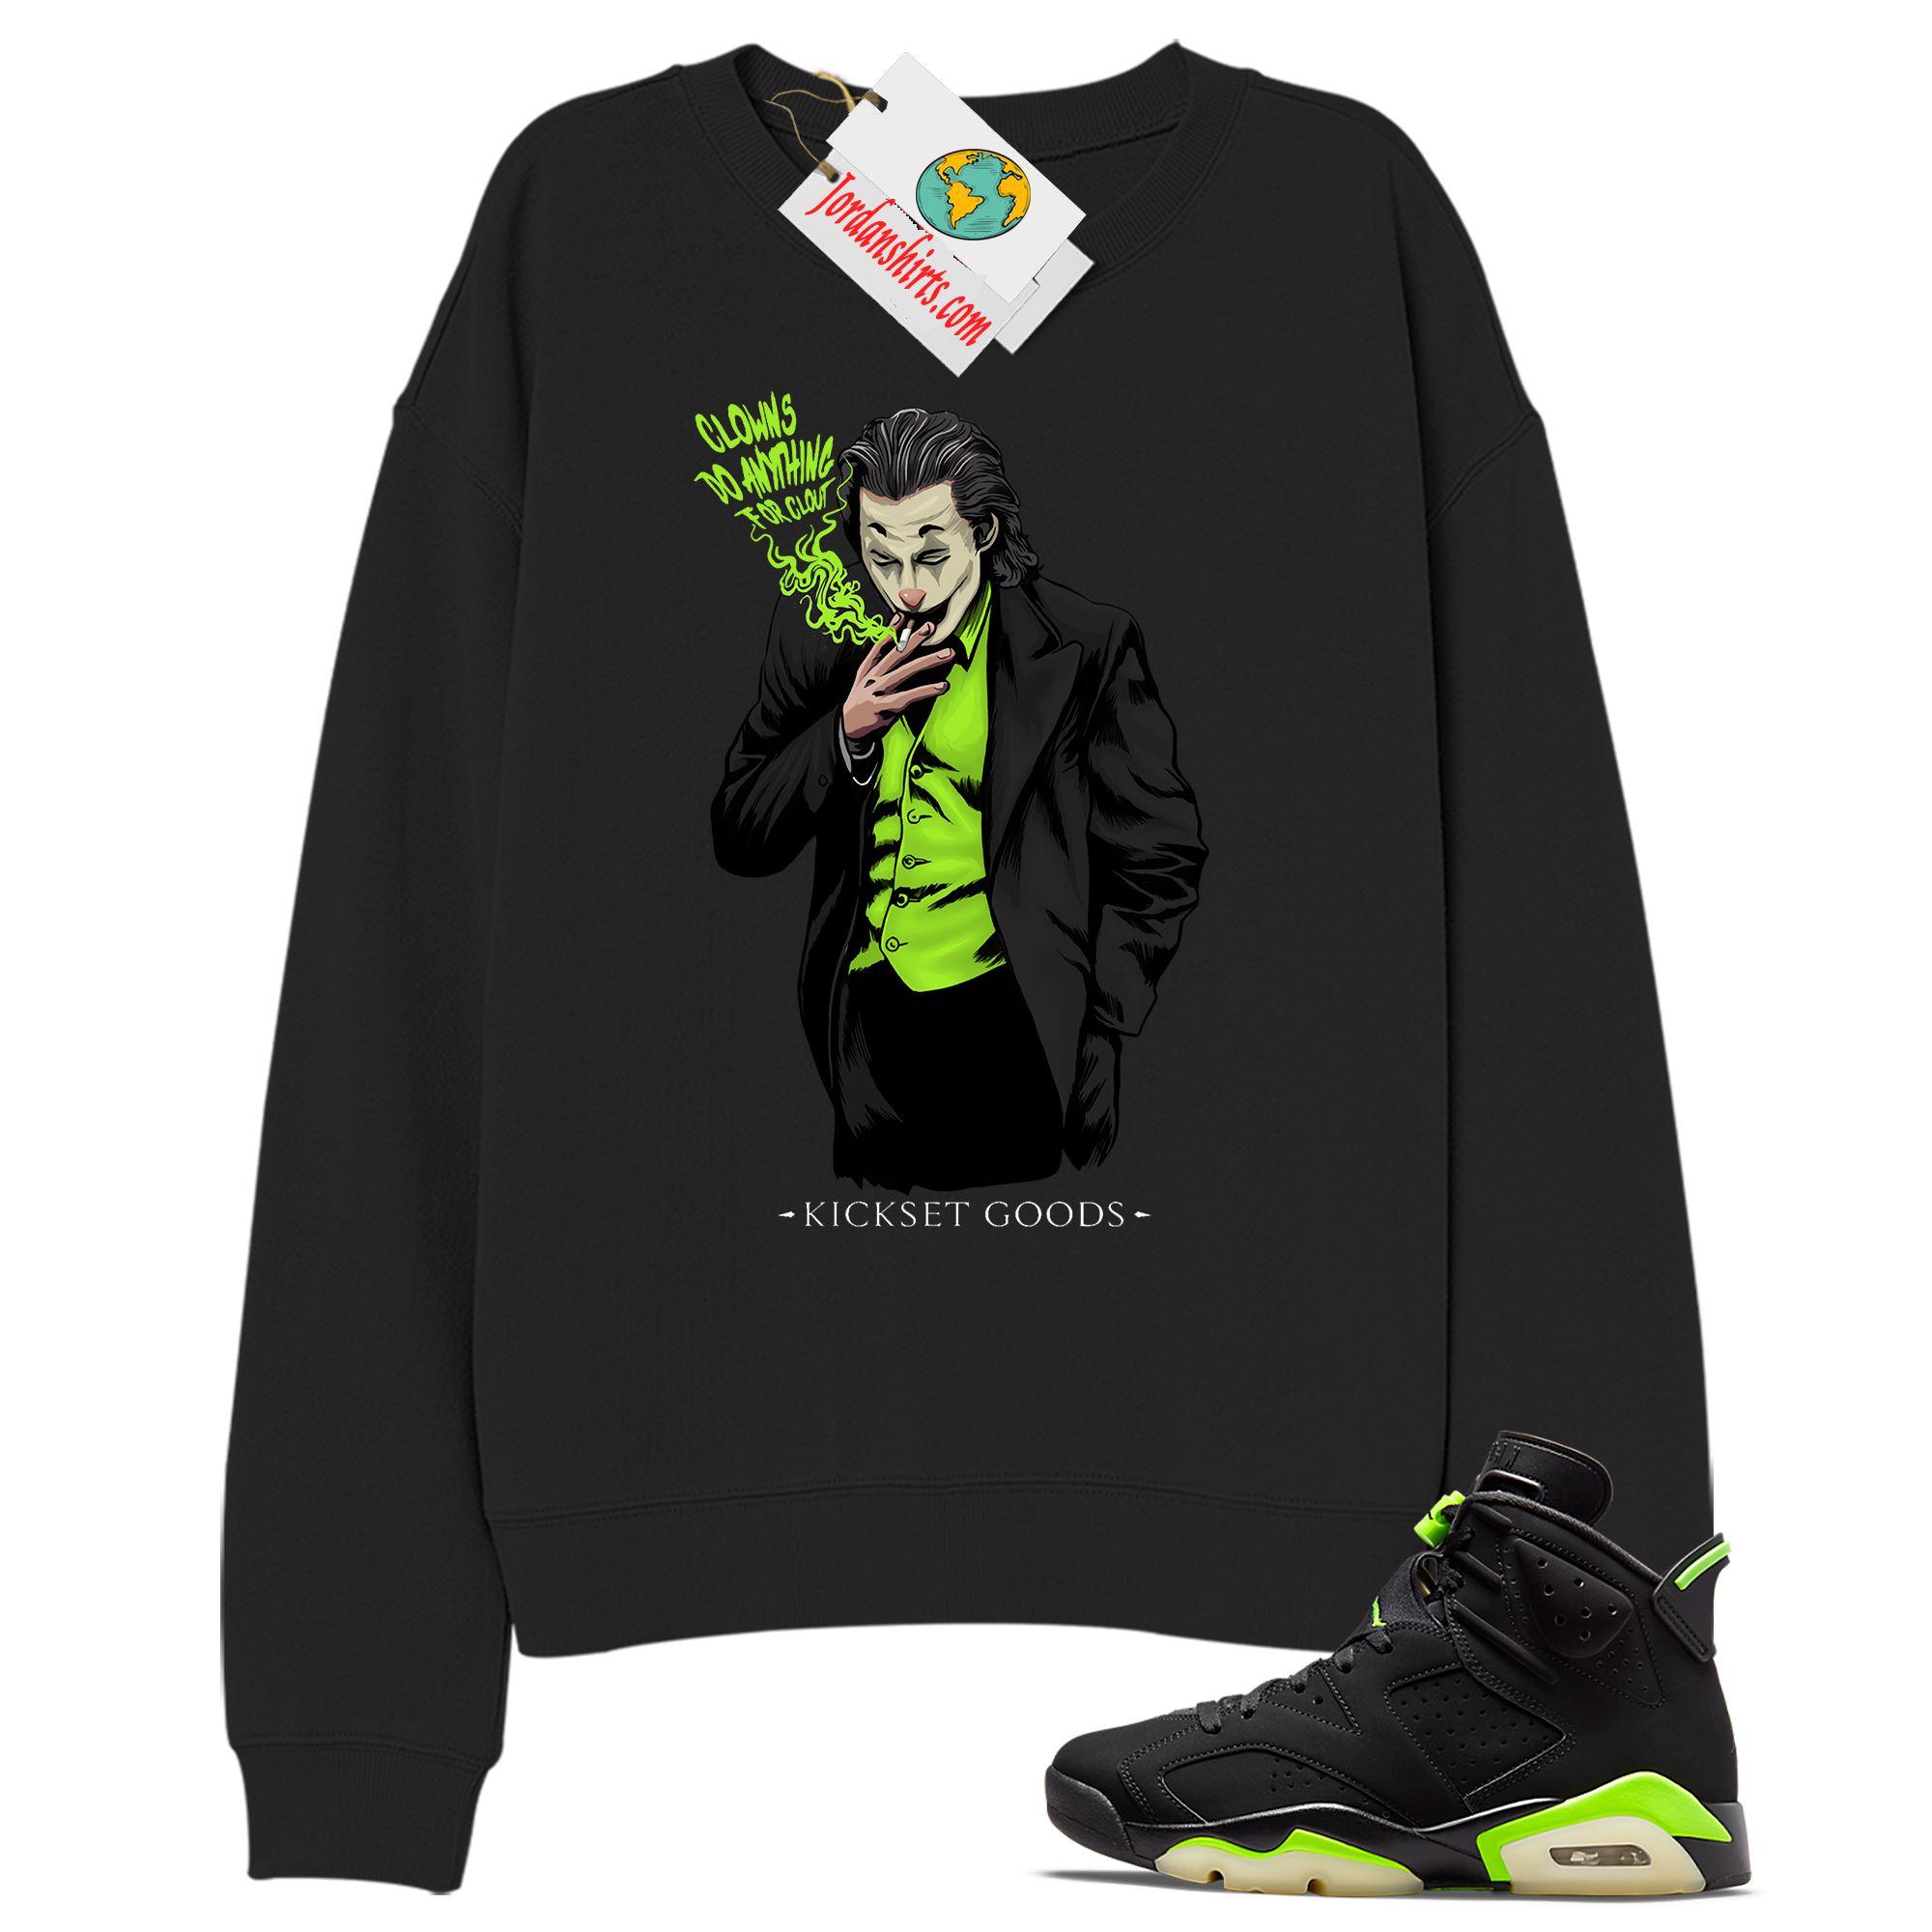 Jordan 6 Sweatshirt, Joker Black Sweatshirt Air Jordan 6 Electric Green 6s Full Size Up To 5xl